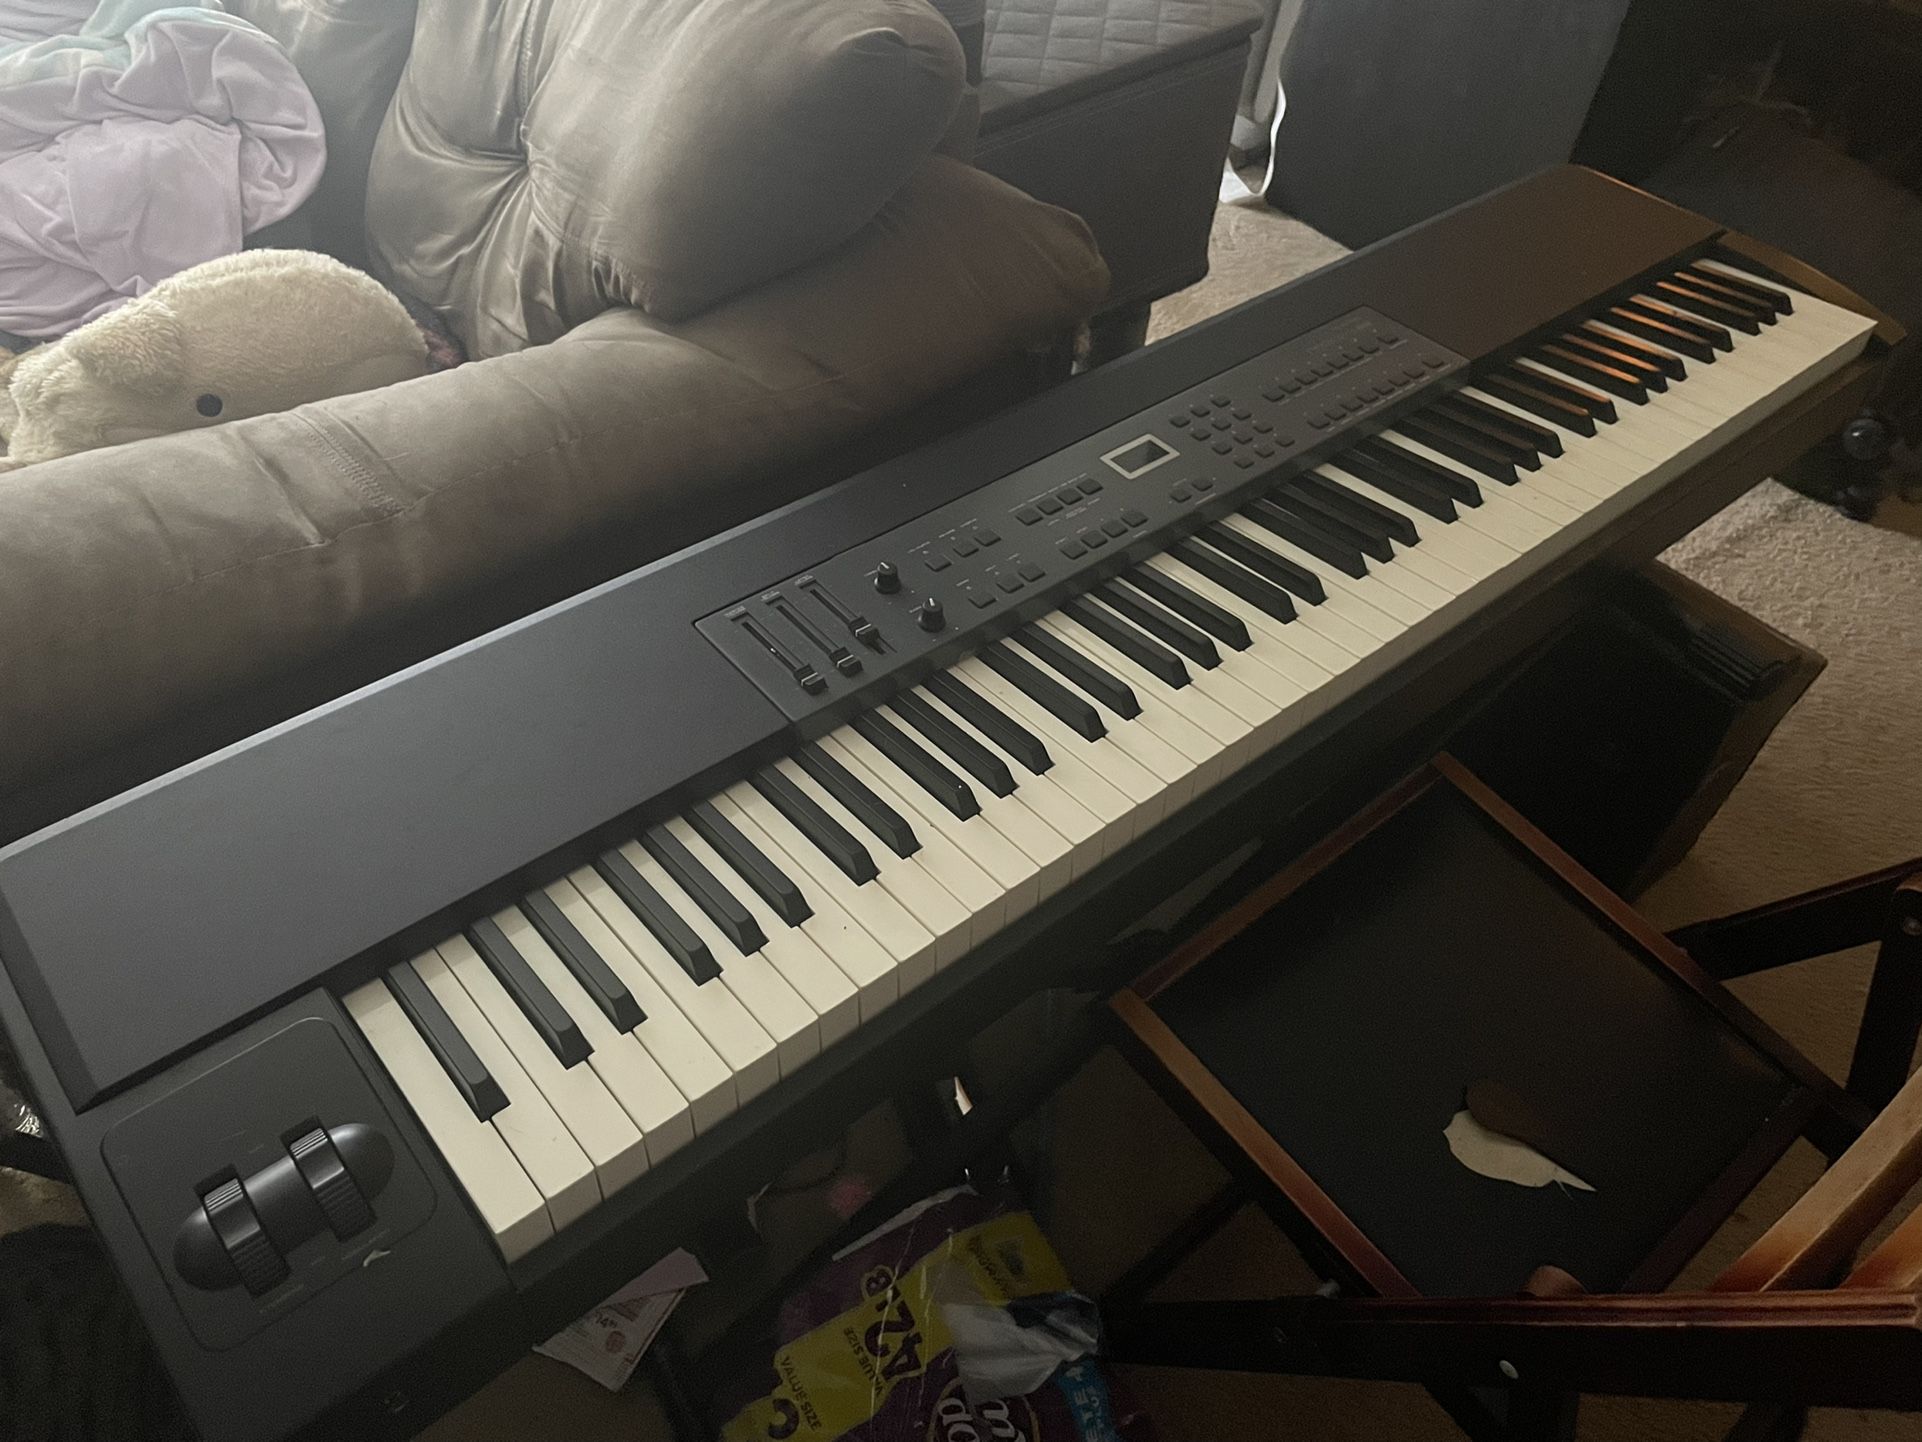 M Audio Pro Keyboard/Digital Piano